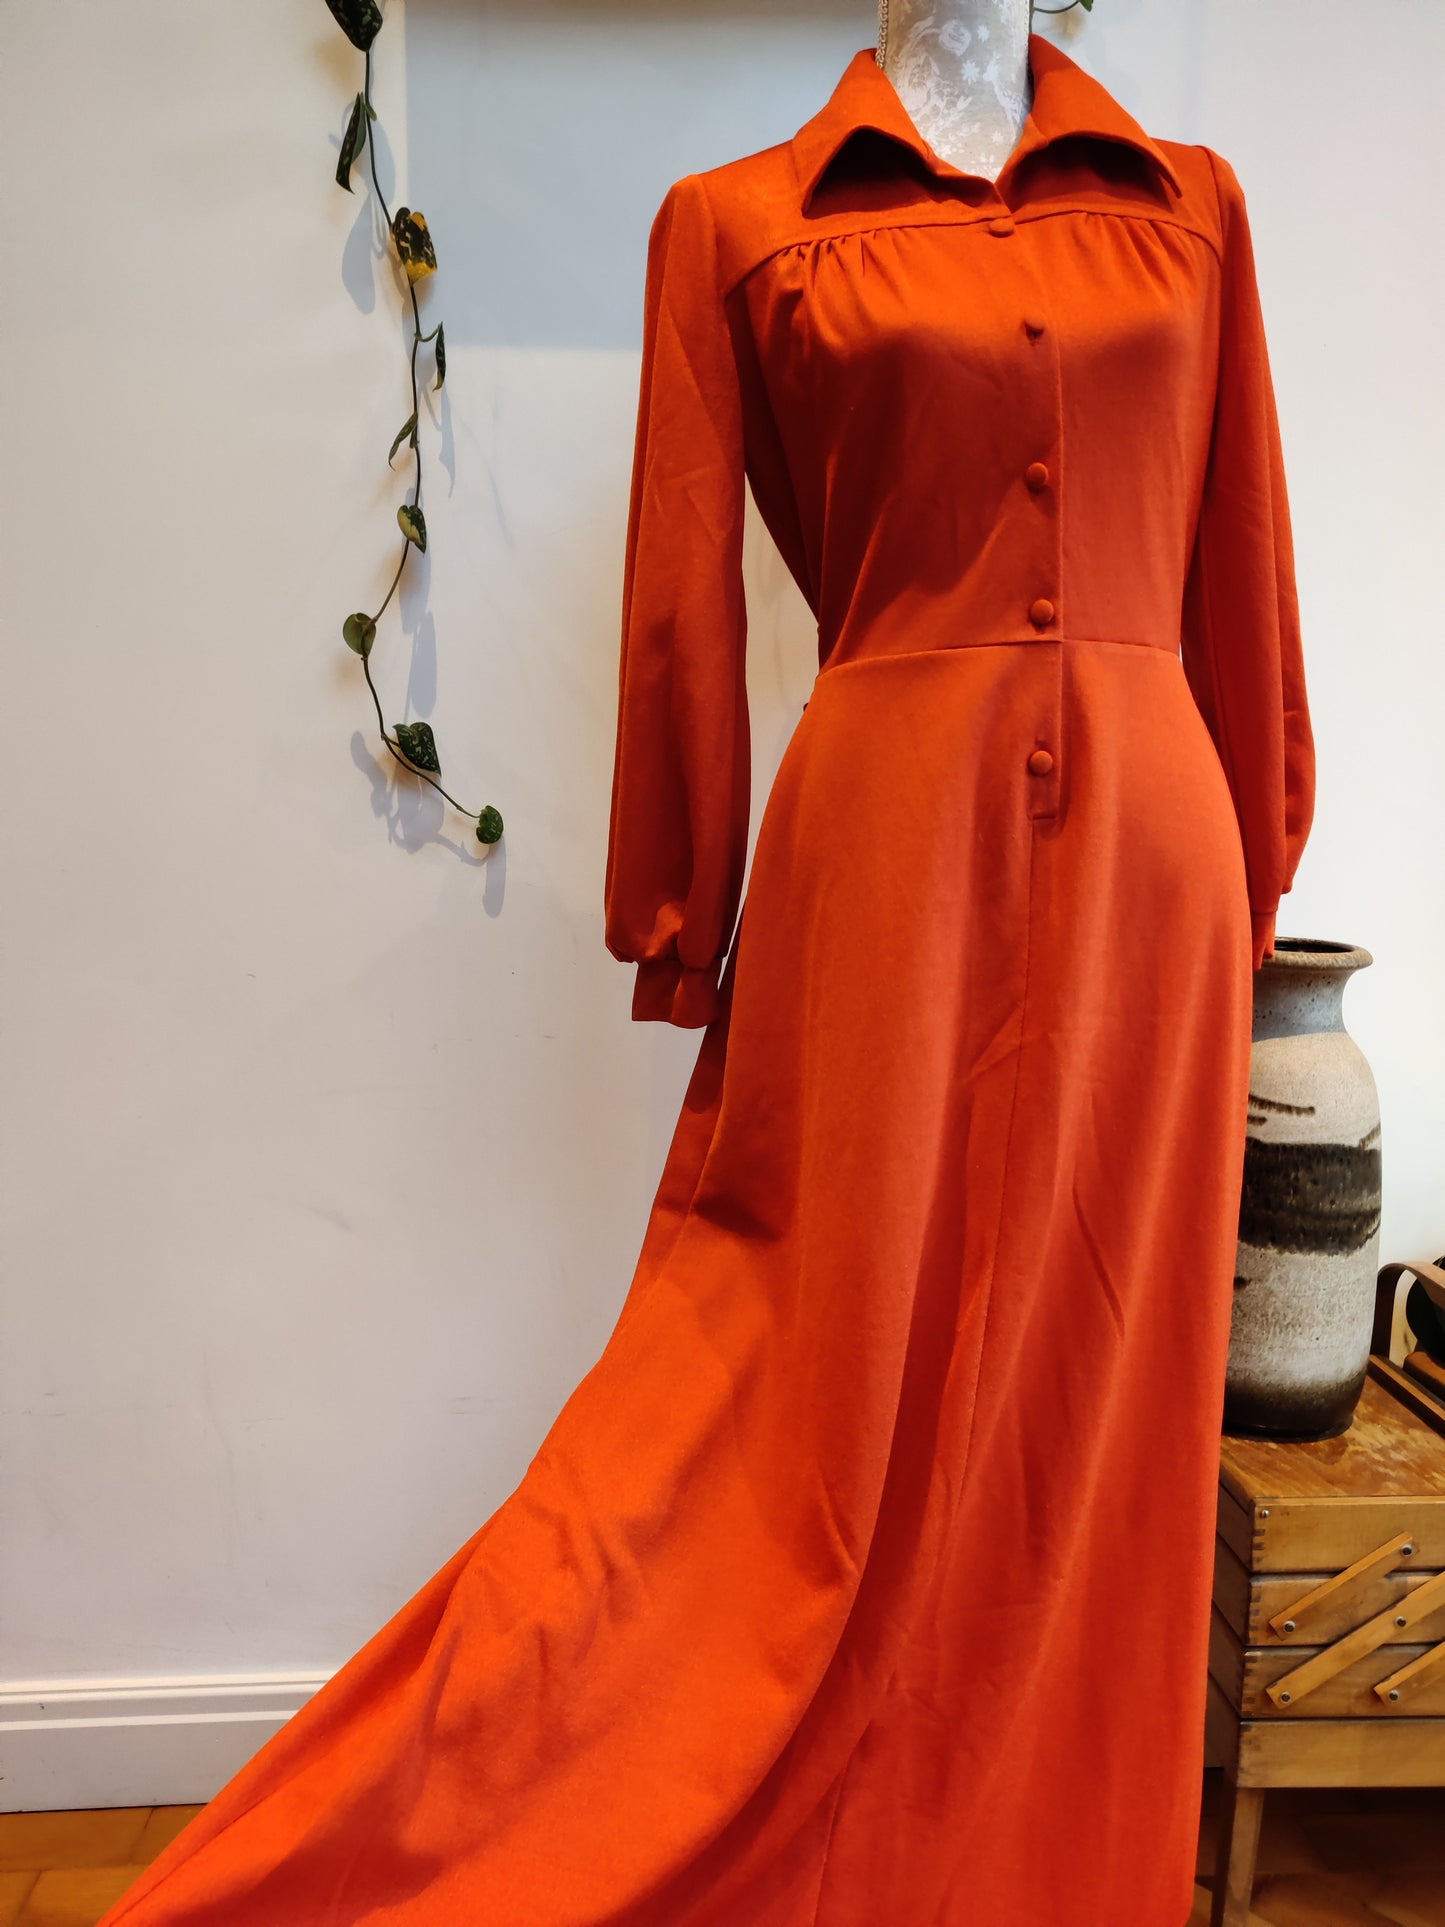 Red vintage maxi dress. 1970s belted dress. Size 12.